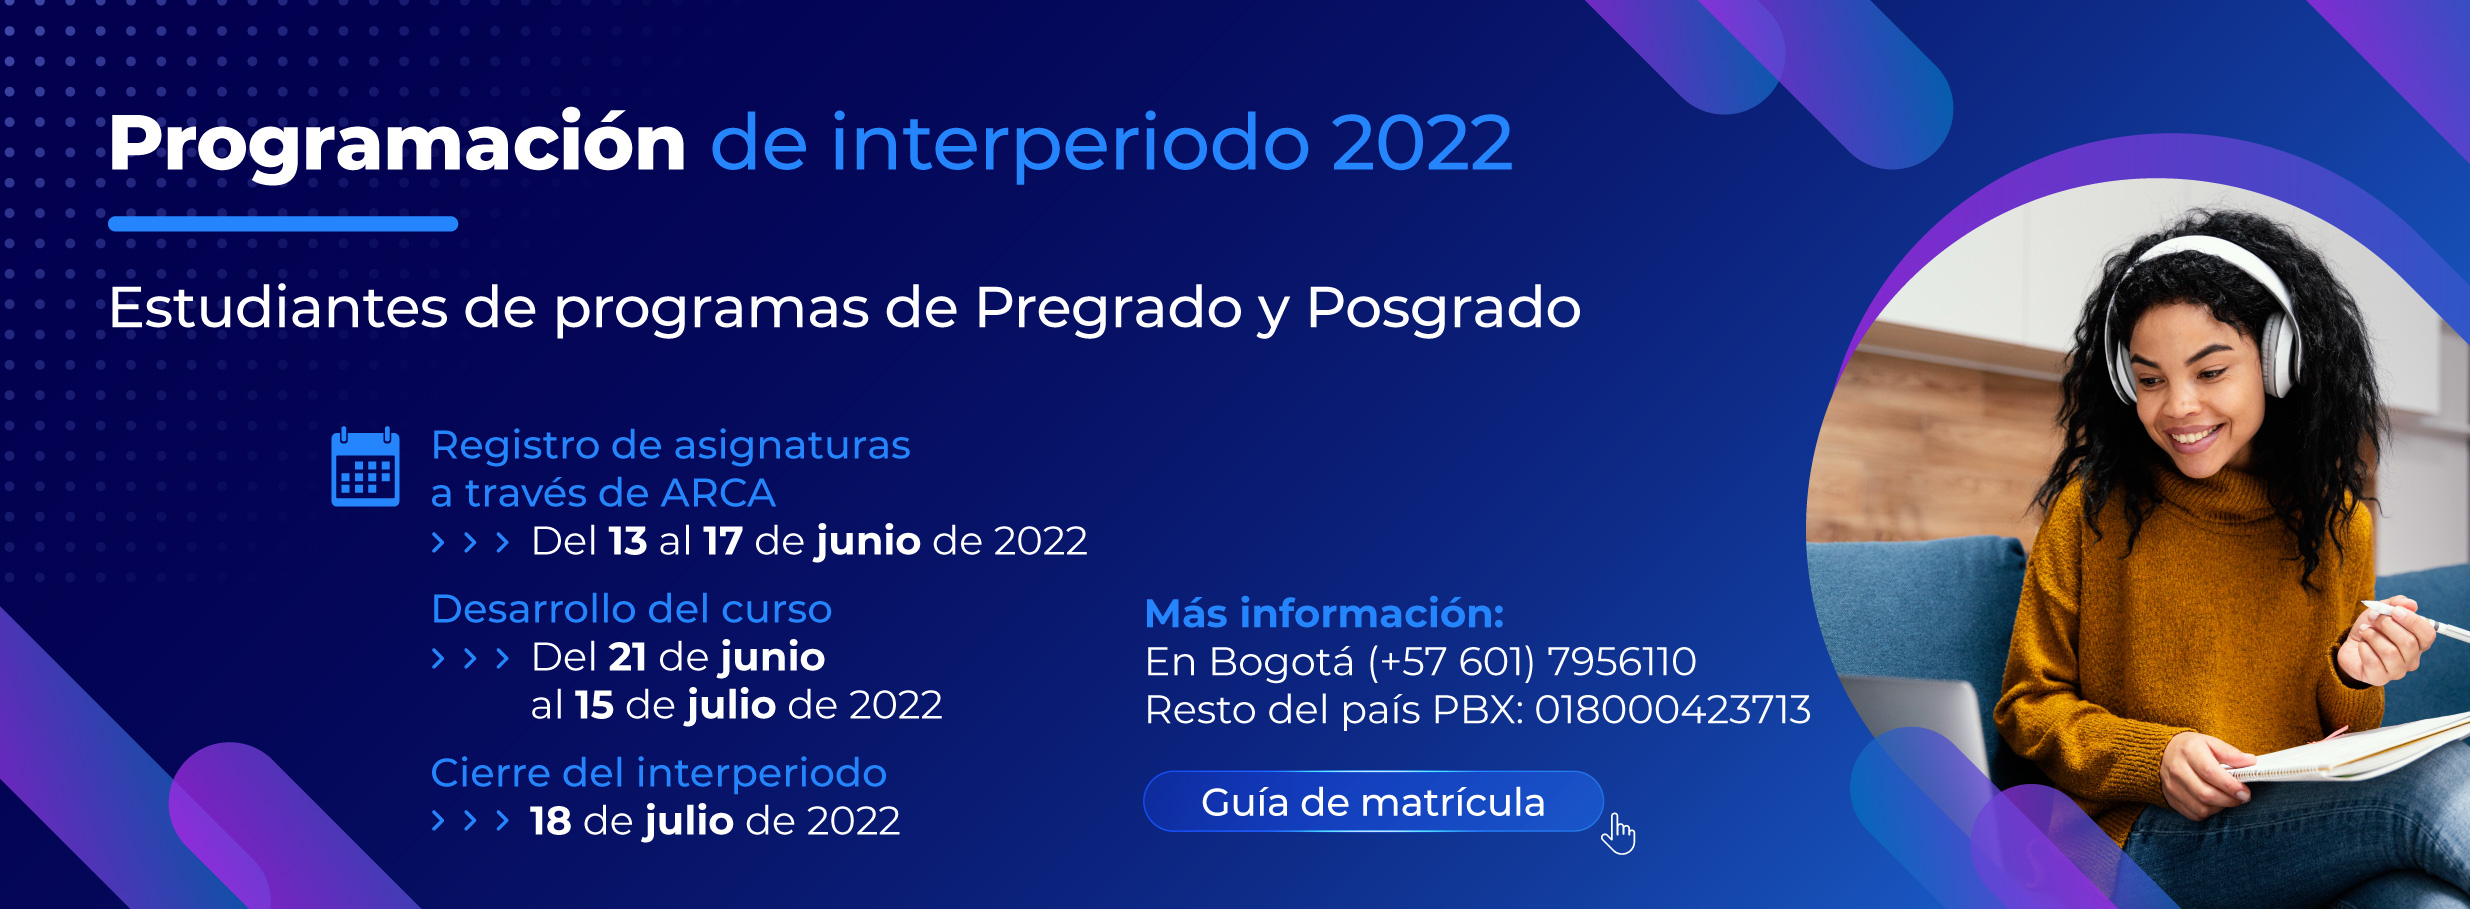 Programación Interperiodo 2022